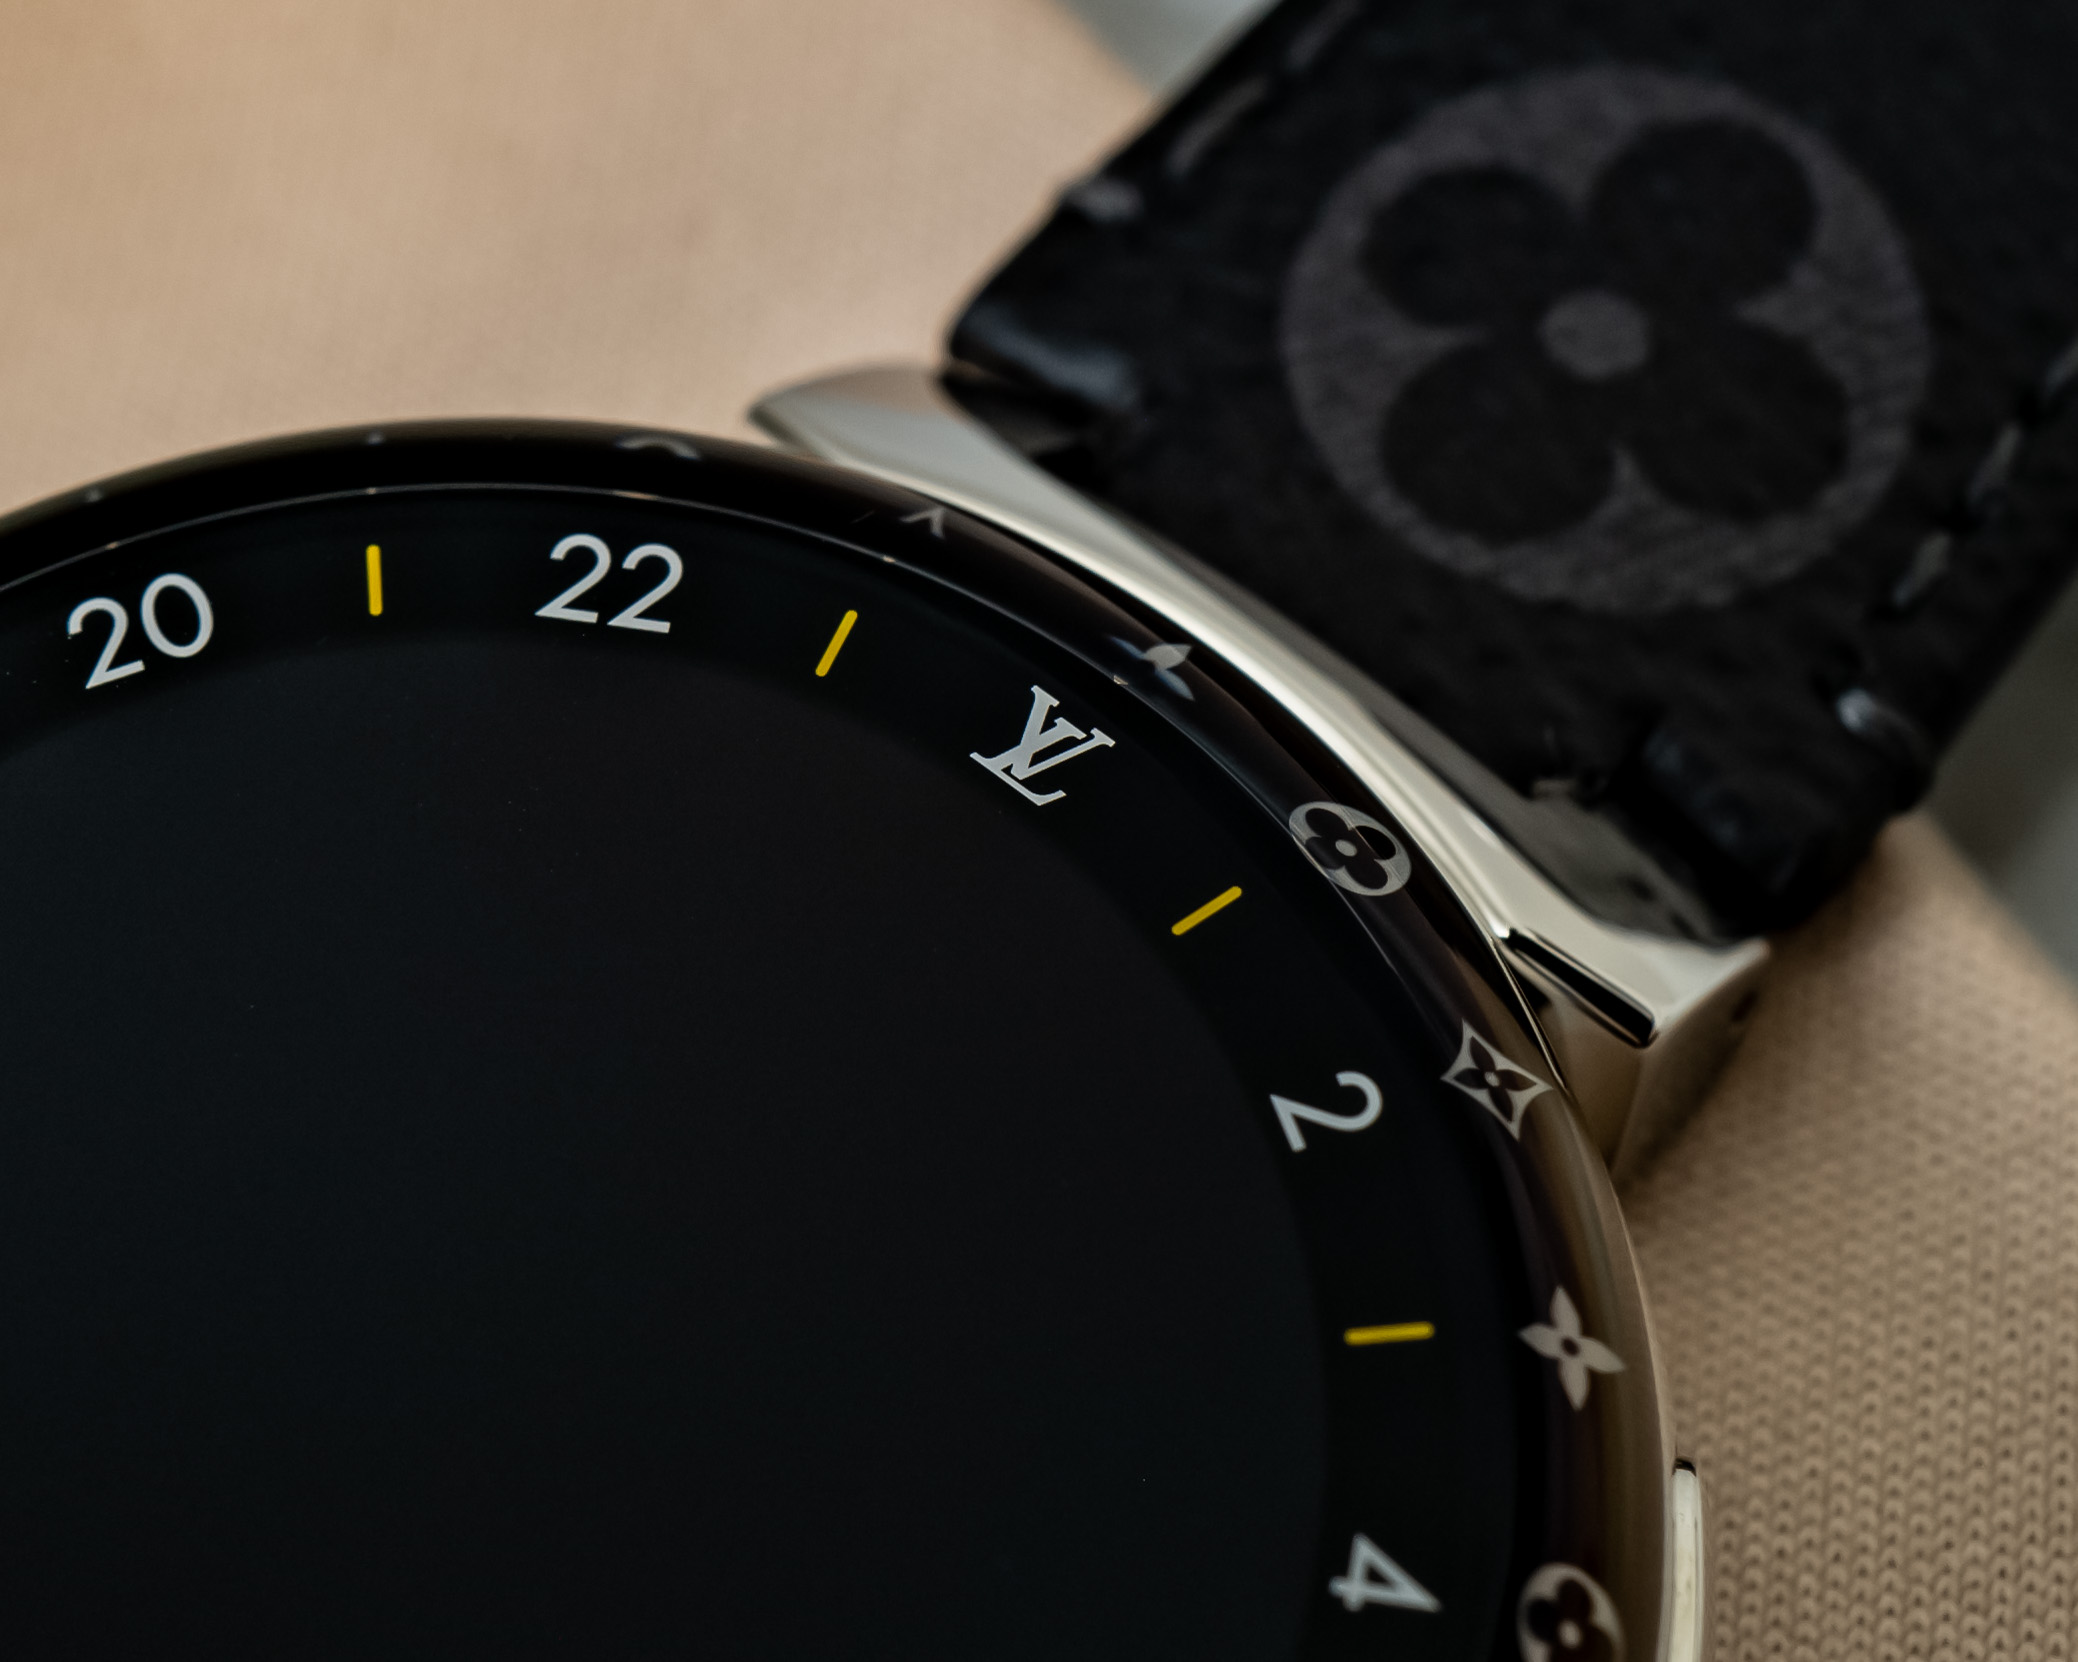 Louis Vuitton Tambour Horizon Lightup review: An expensive but amped-up  smartwatch - Techgoondu